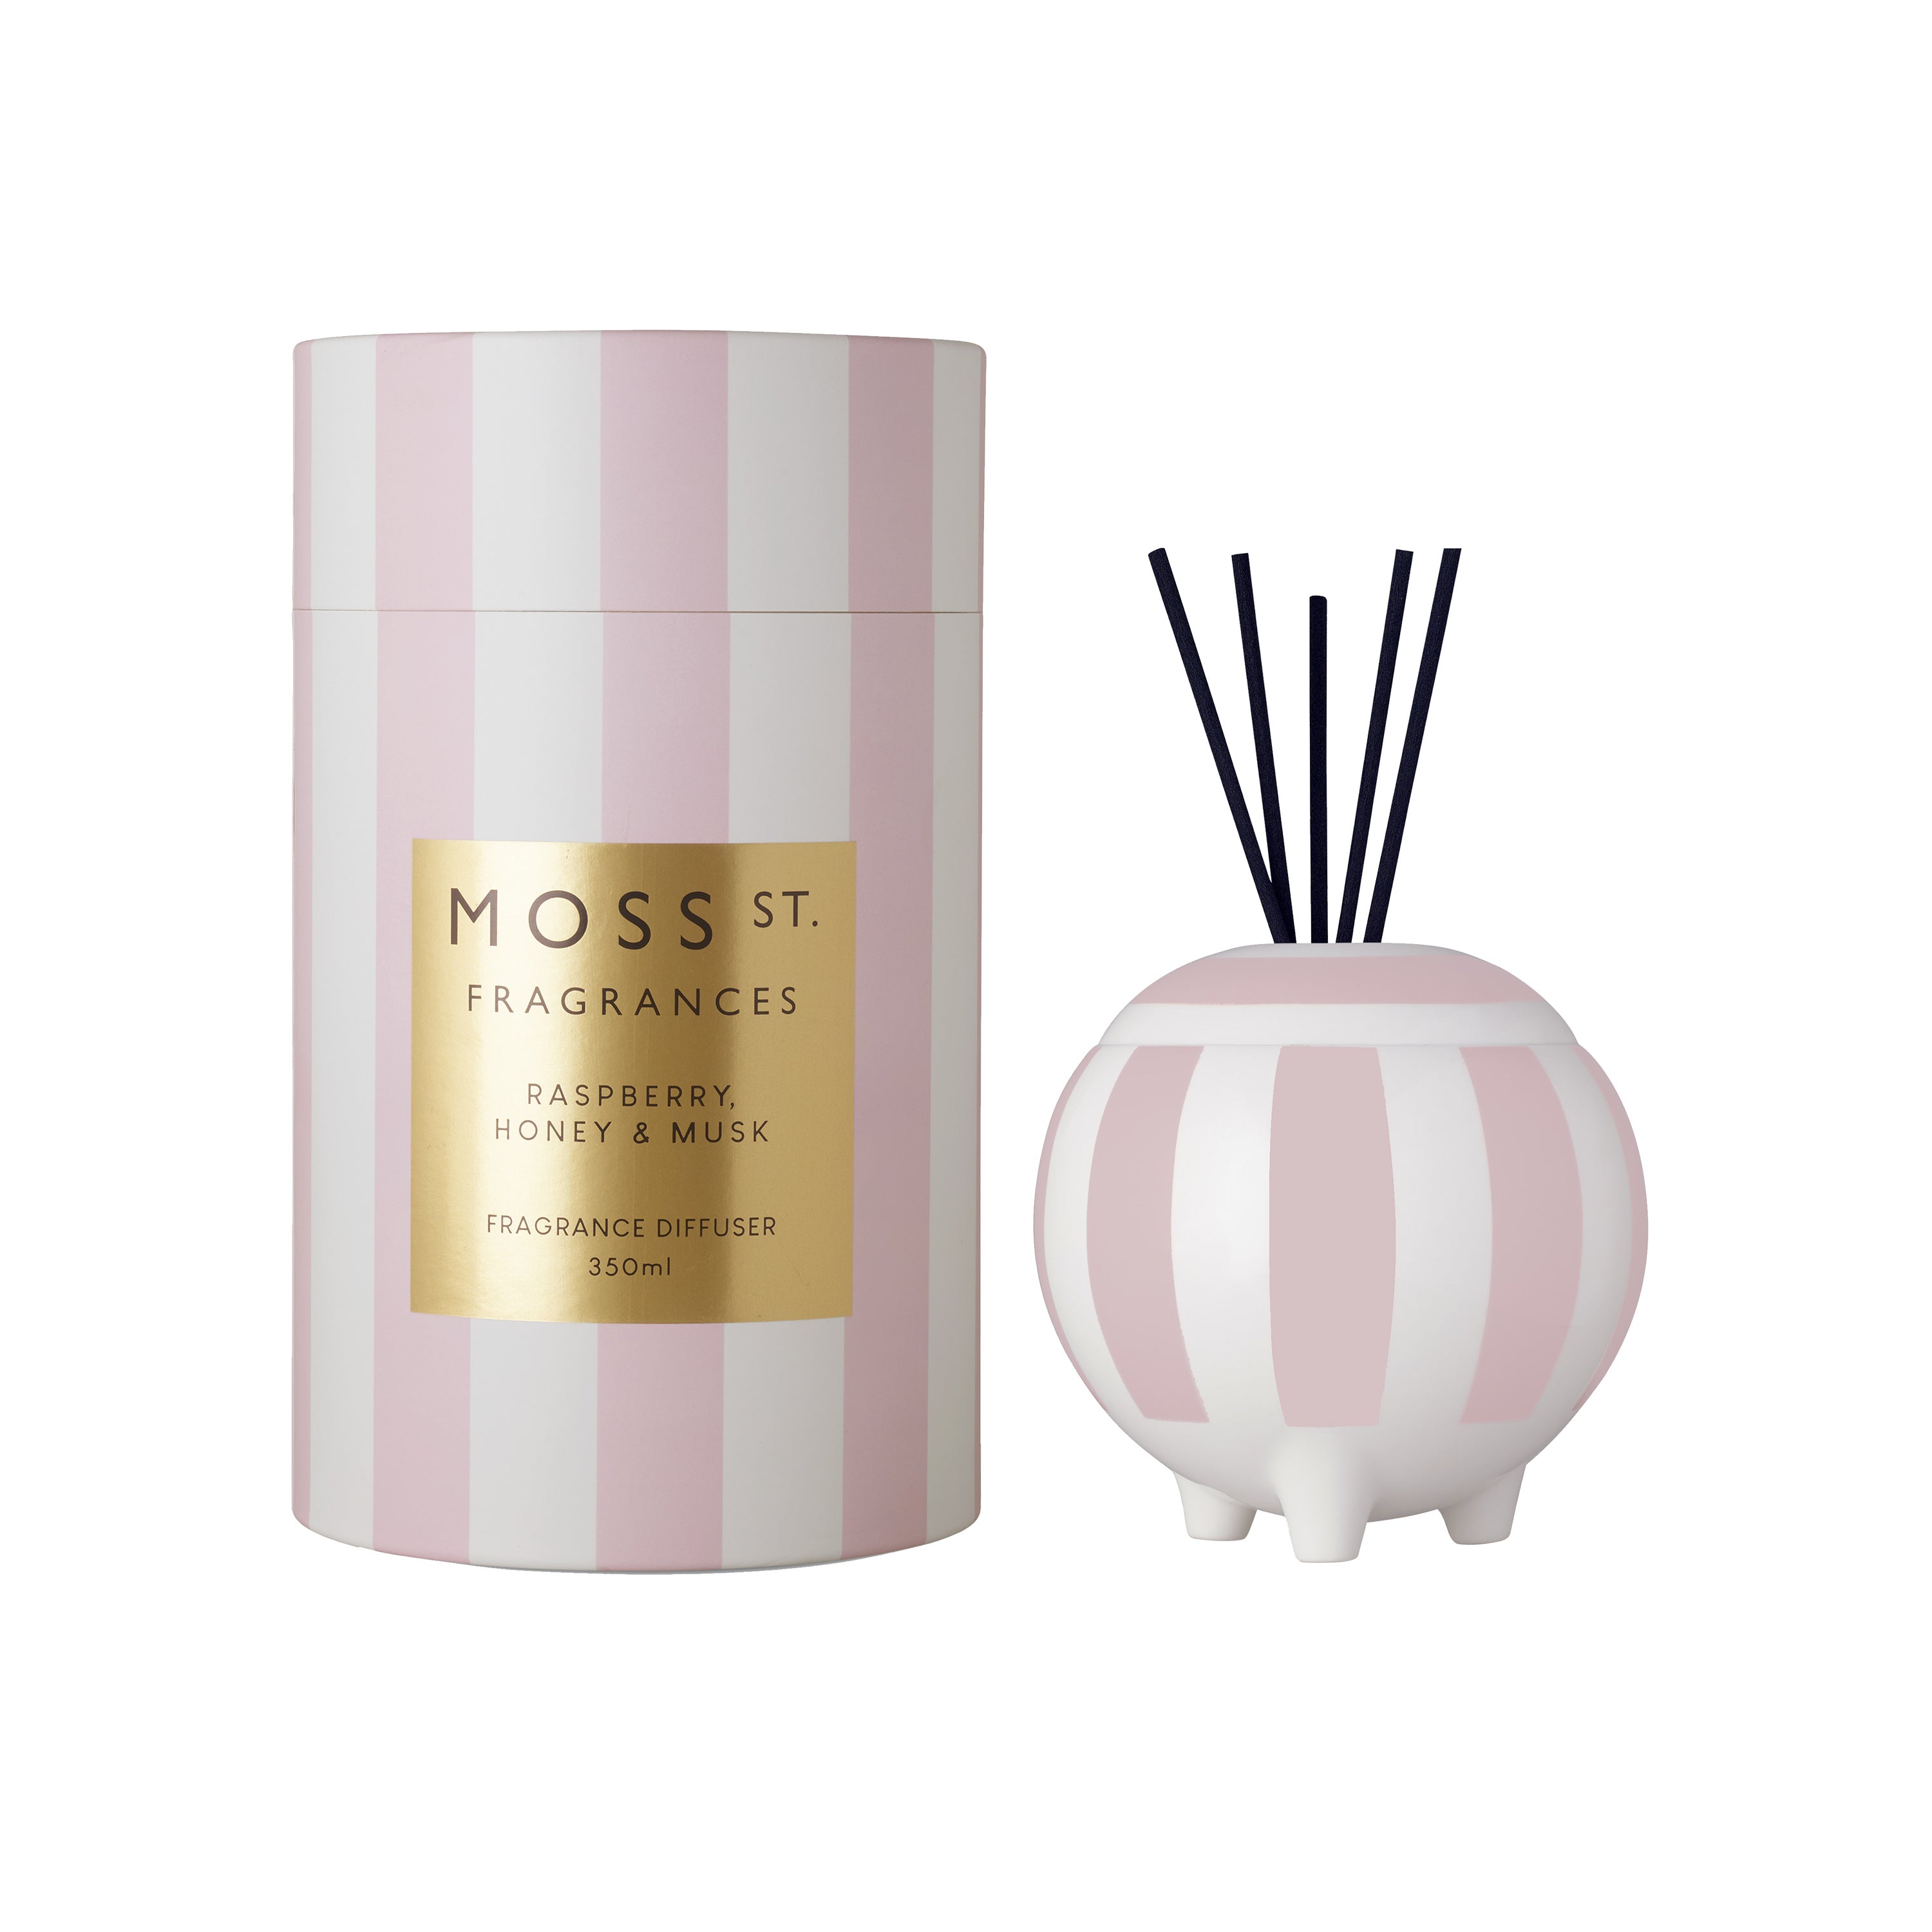 Moss St Raspberry, Honey & Musk Ceramic Large Diffuser 350ml